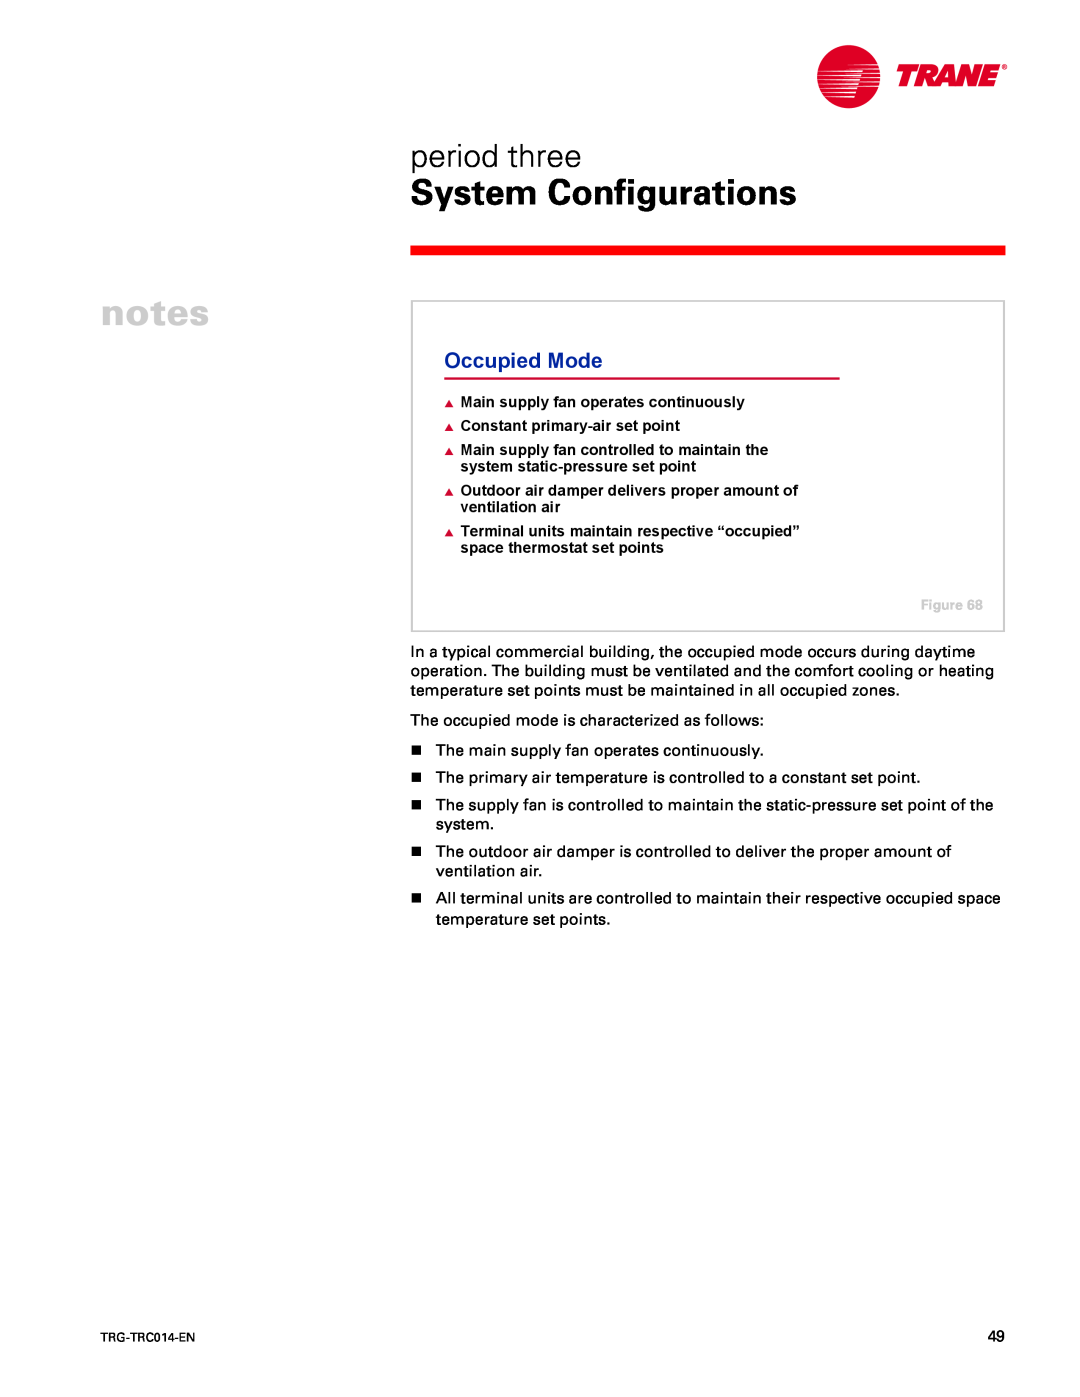 Trane TRG-TRC014-EN manual Occupied Mode, System Configurations, period three 